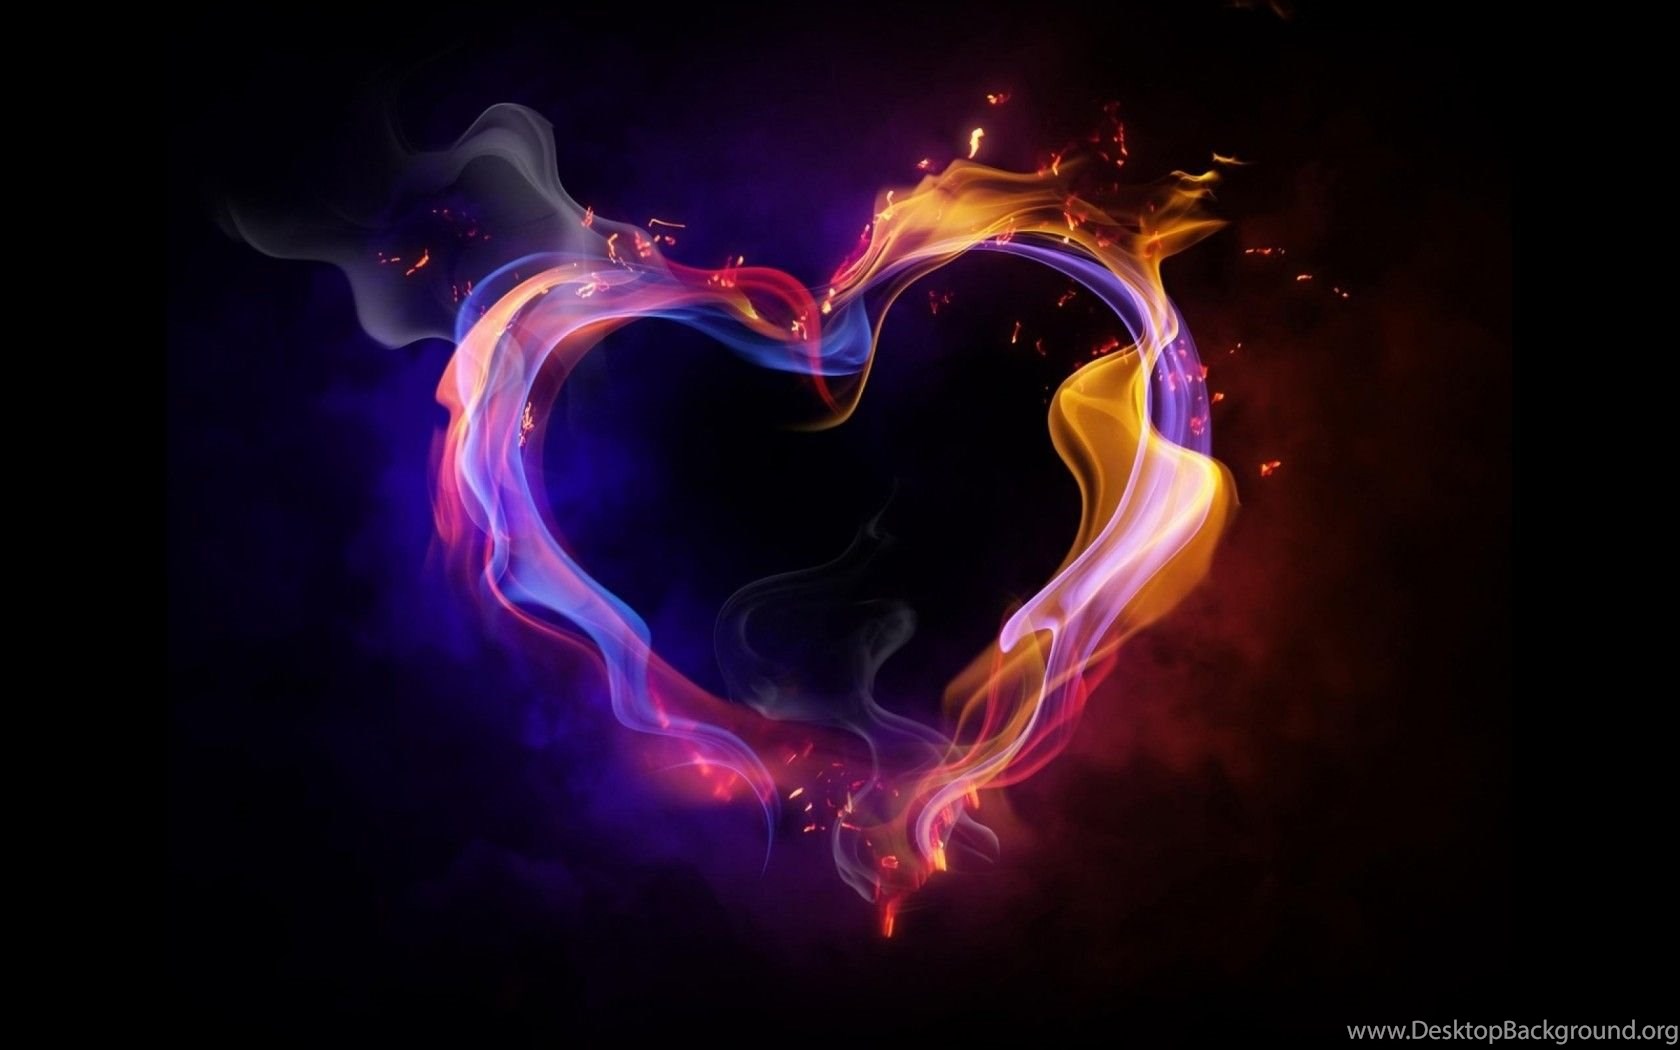 Colorful Heart Love Wallpaper For PC To Make Beautiful Desktop Desktop Background